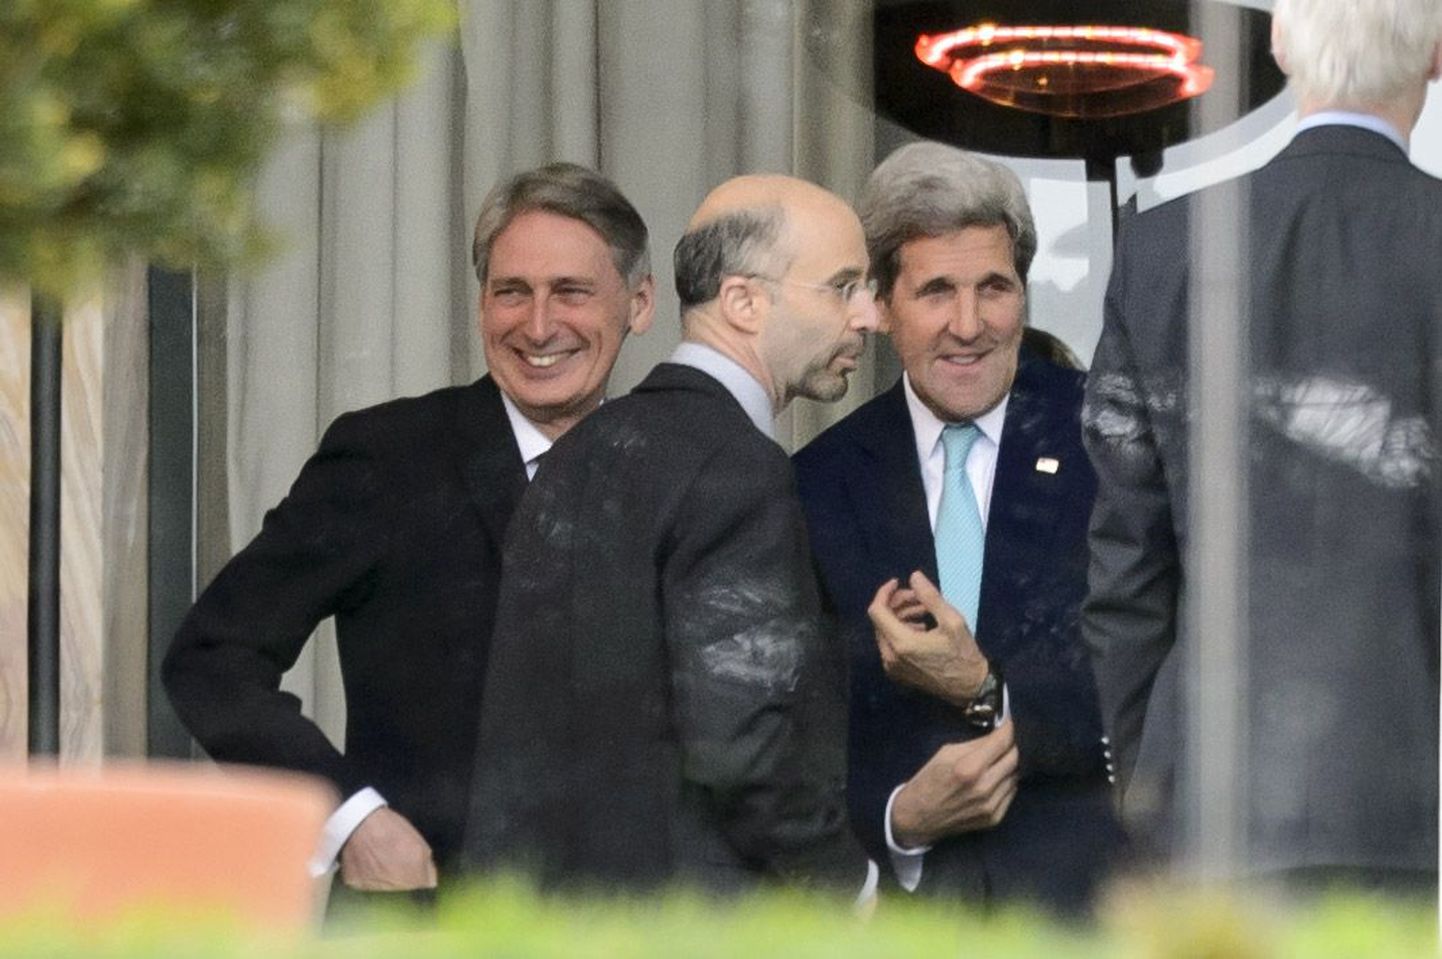 Briti välisminister Philip Hammond (vasakul) ja USA välisminister John Kerry (paremal) Lausanne´is.